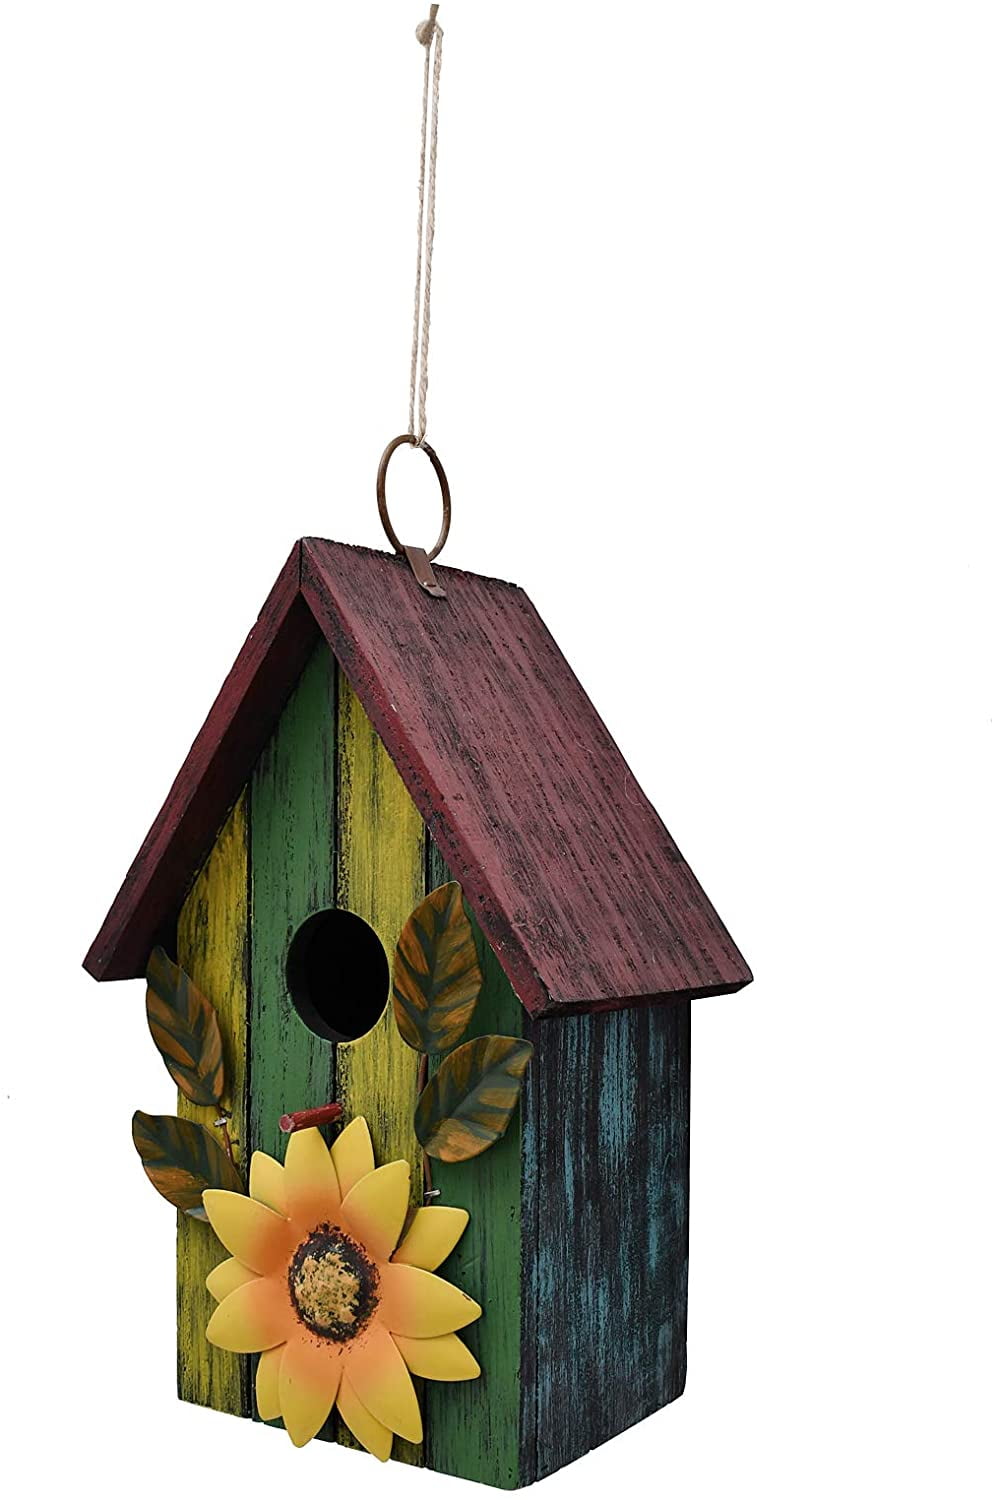 Rustic Garden Tall Hanging Green Hand Painted Wood Bird House Feeder Nest New 